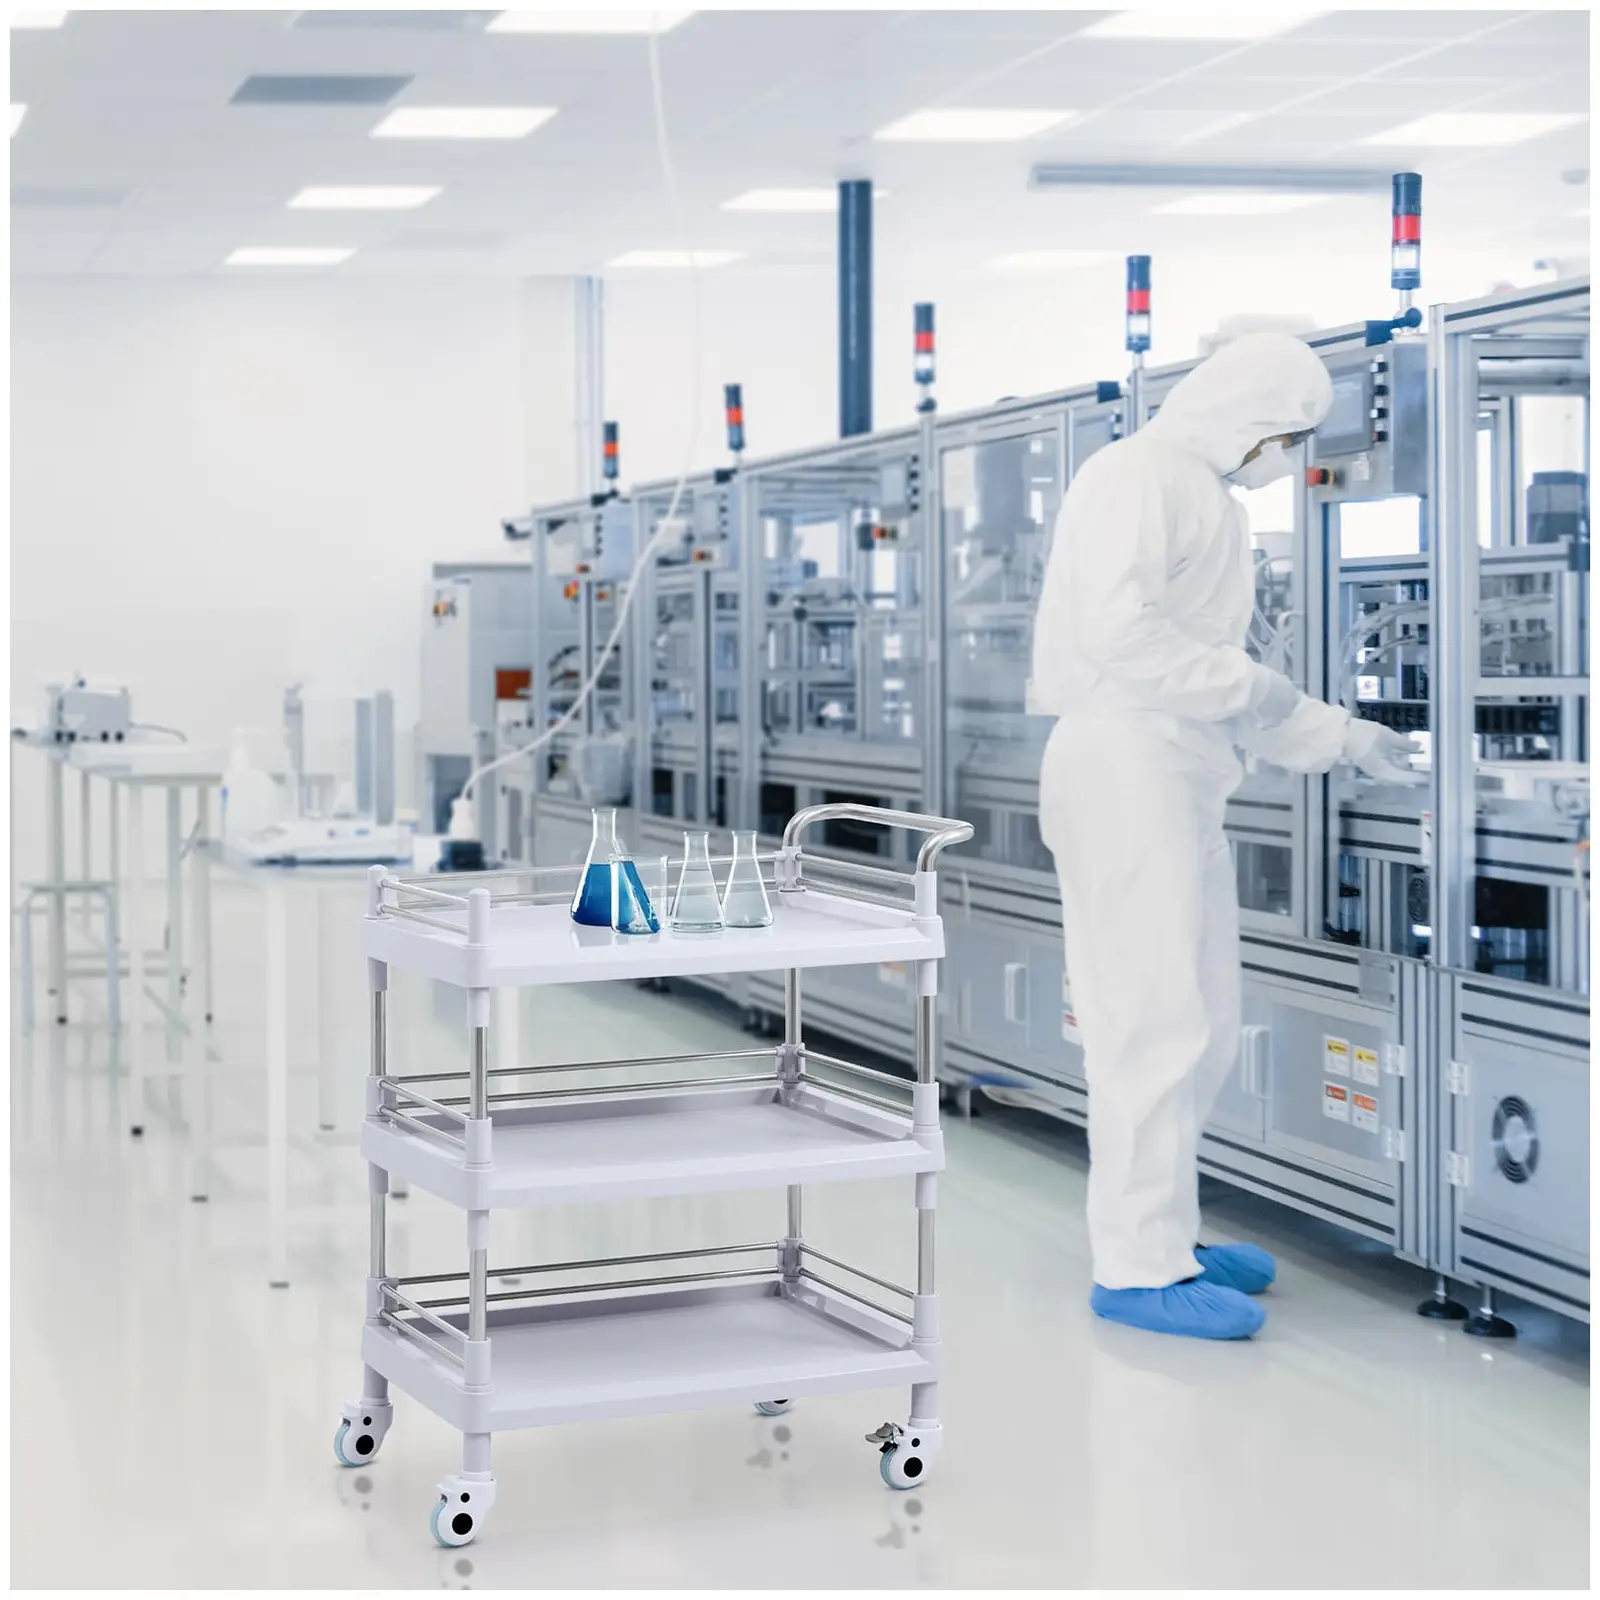 Factory second Laboratory Trolley - 3 shelves each 53 x 38 x 5 cm - 30 kg